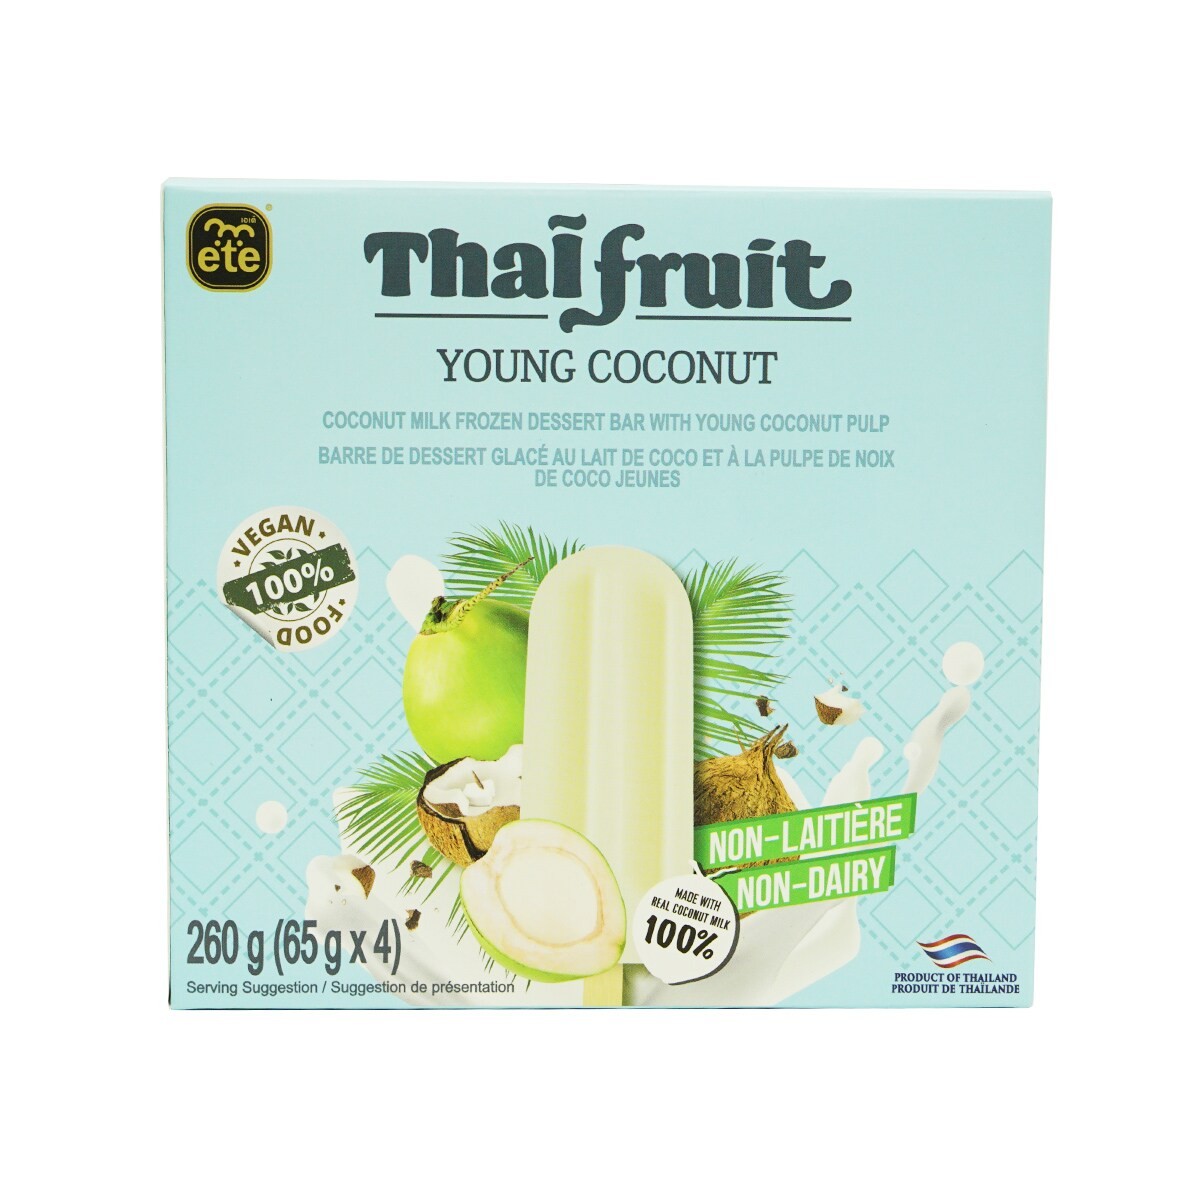 coconut-milk-frozen-dessert-bar-with-young-coconut-pulp